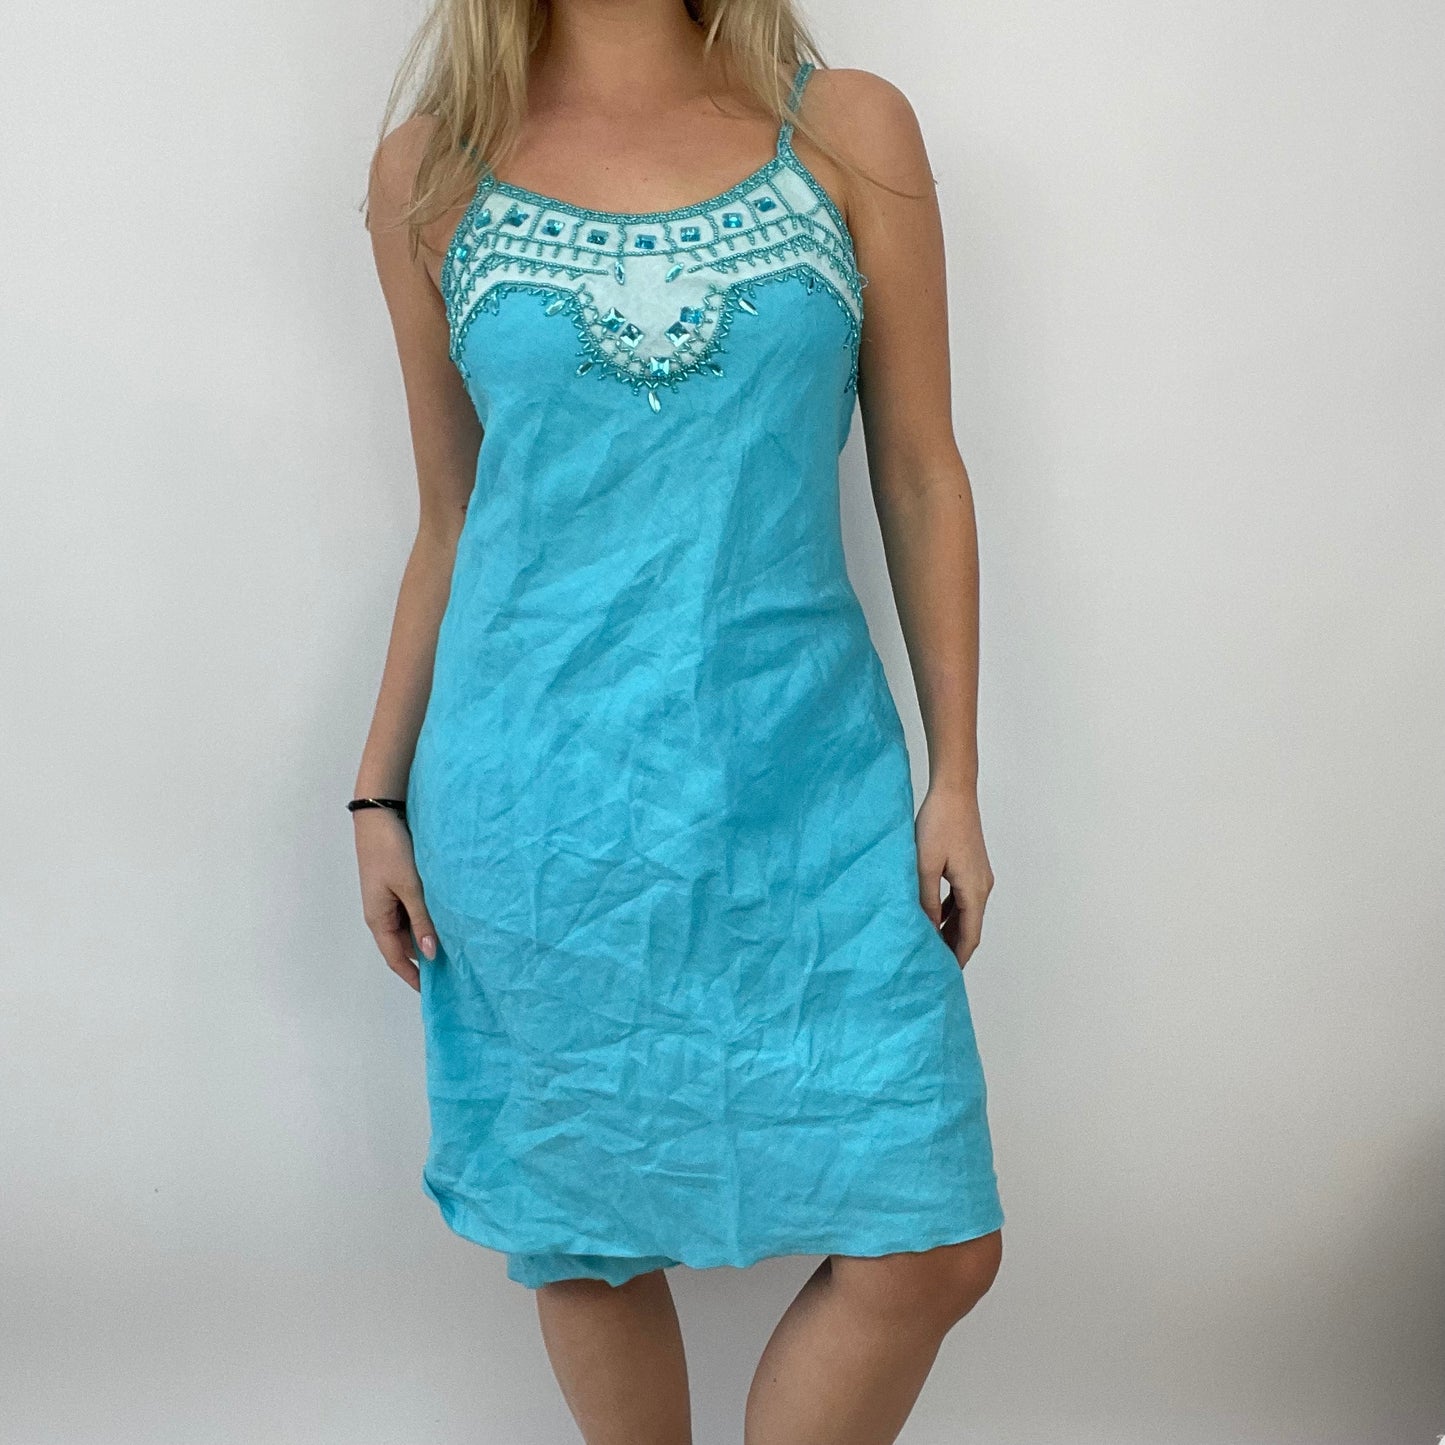 ETHEREAL GIRL DROP | medium blue linen dress with beaded detail